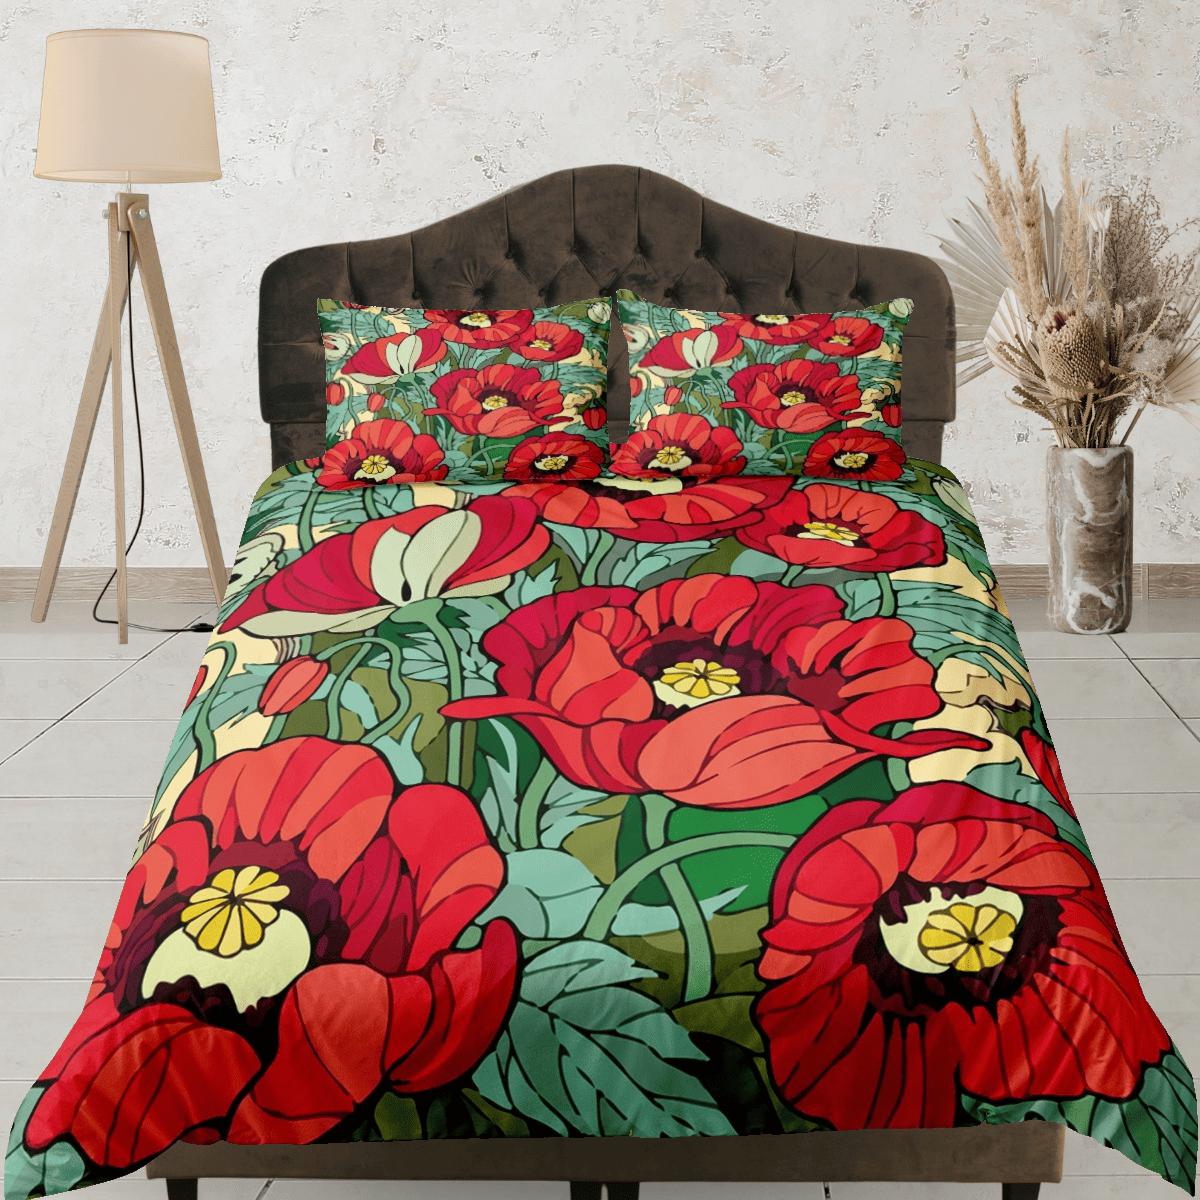 daintyduvet Red poppies green duvet cover floral bedding, teen girl bedroom, baby girl crib bedding boho maximalist bedspread aesthetic bedding